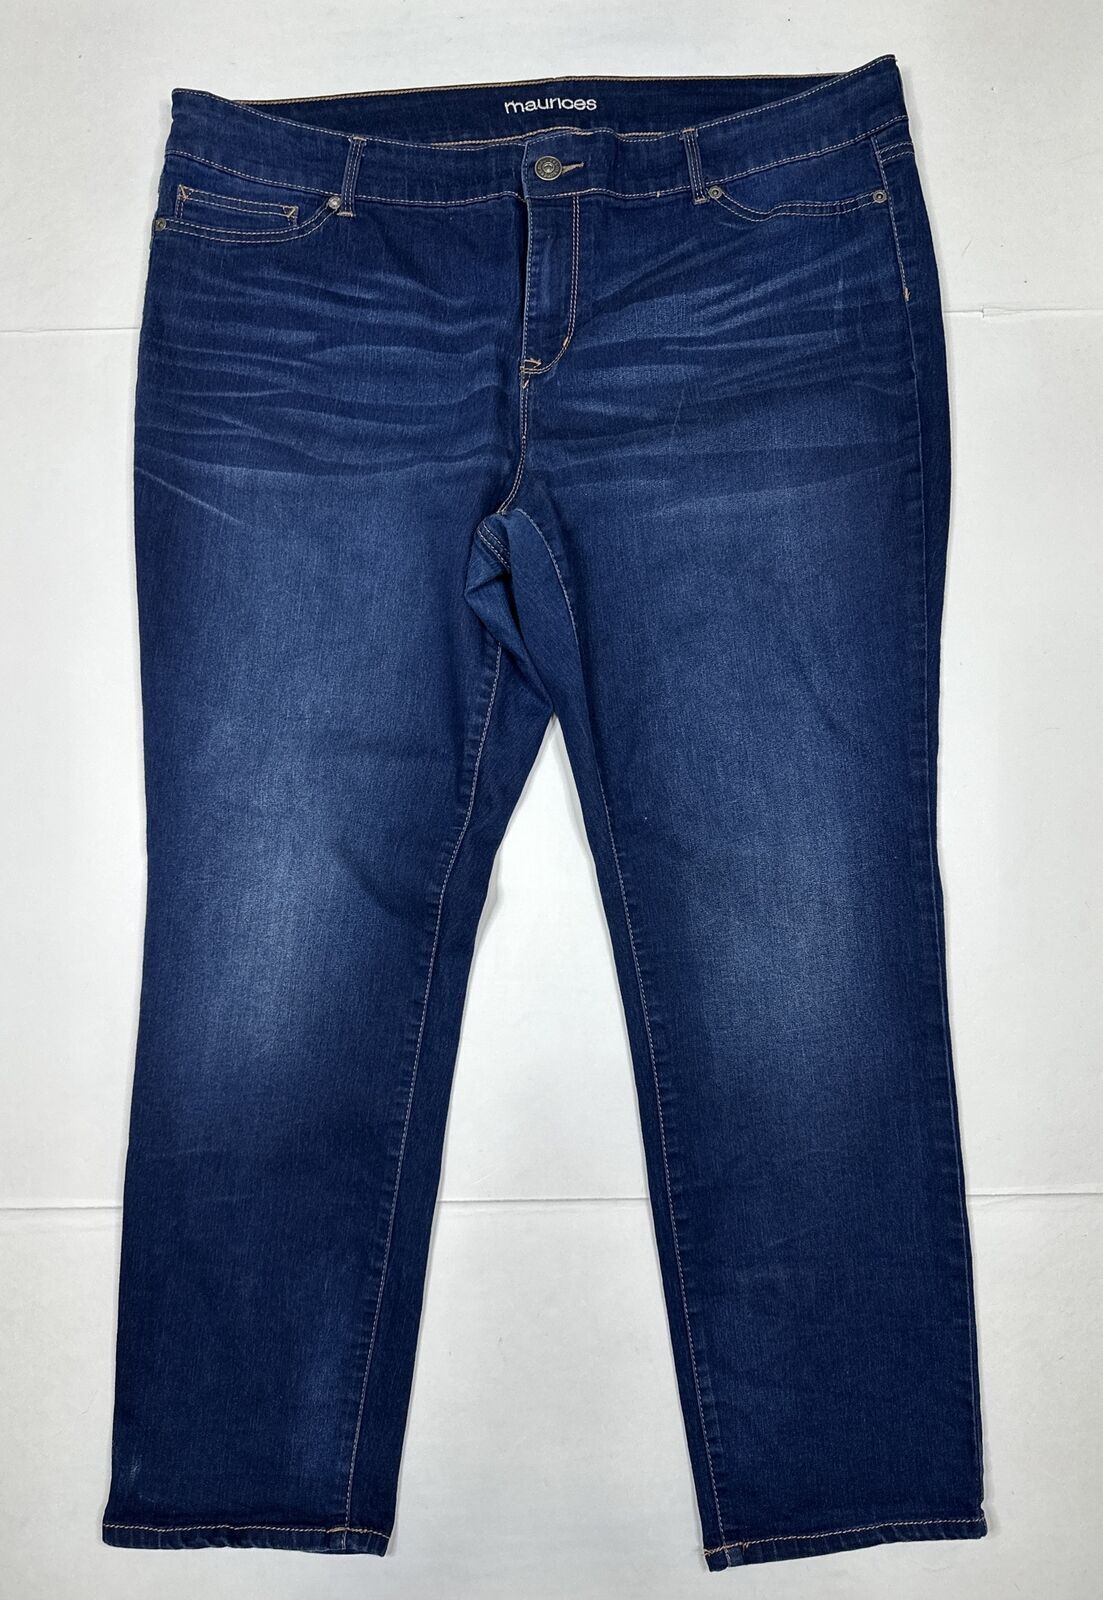 Maurices Dark Skinny Stretch Jeans Women Plus Size 22s (Measure 41x28)